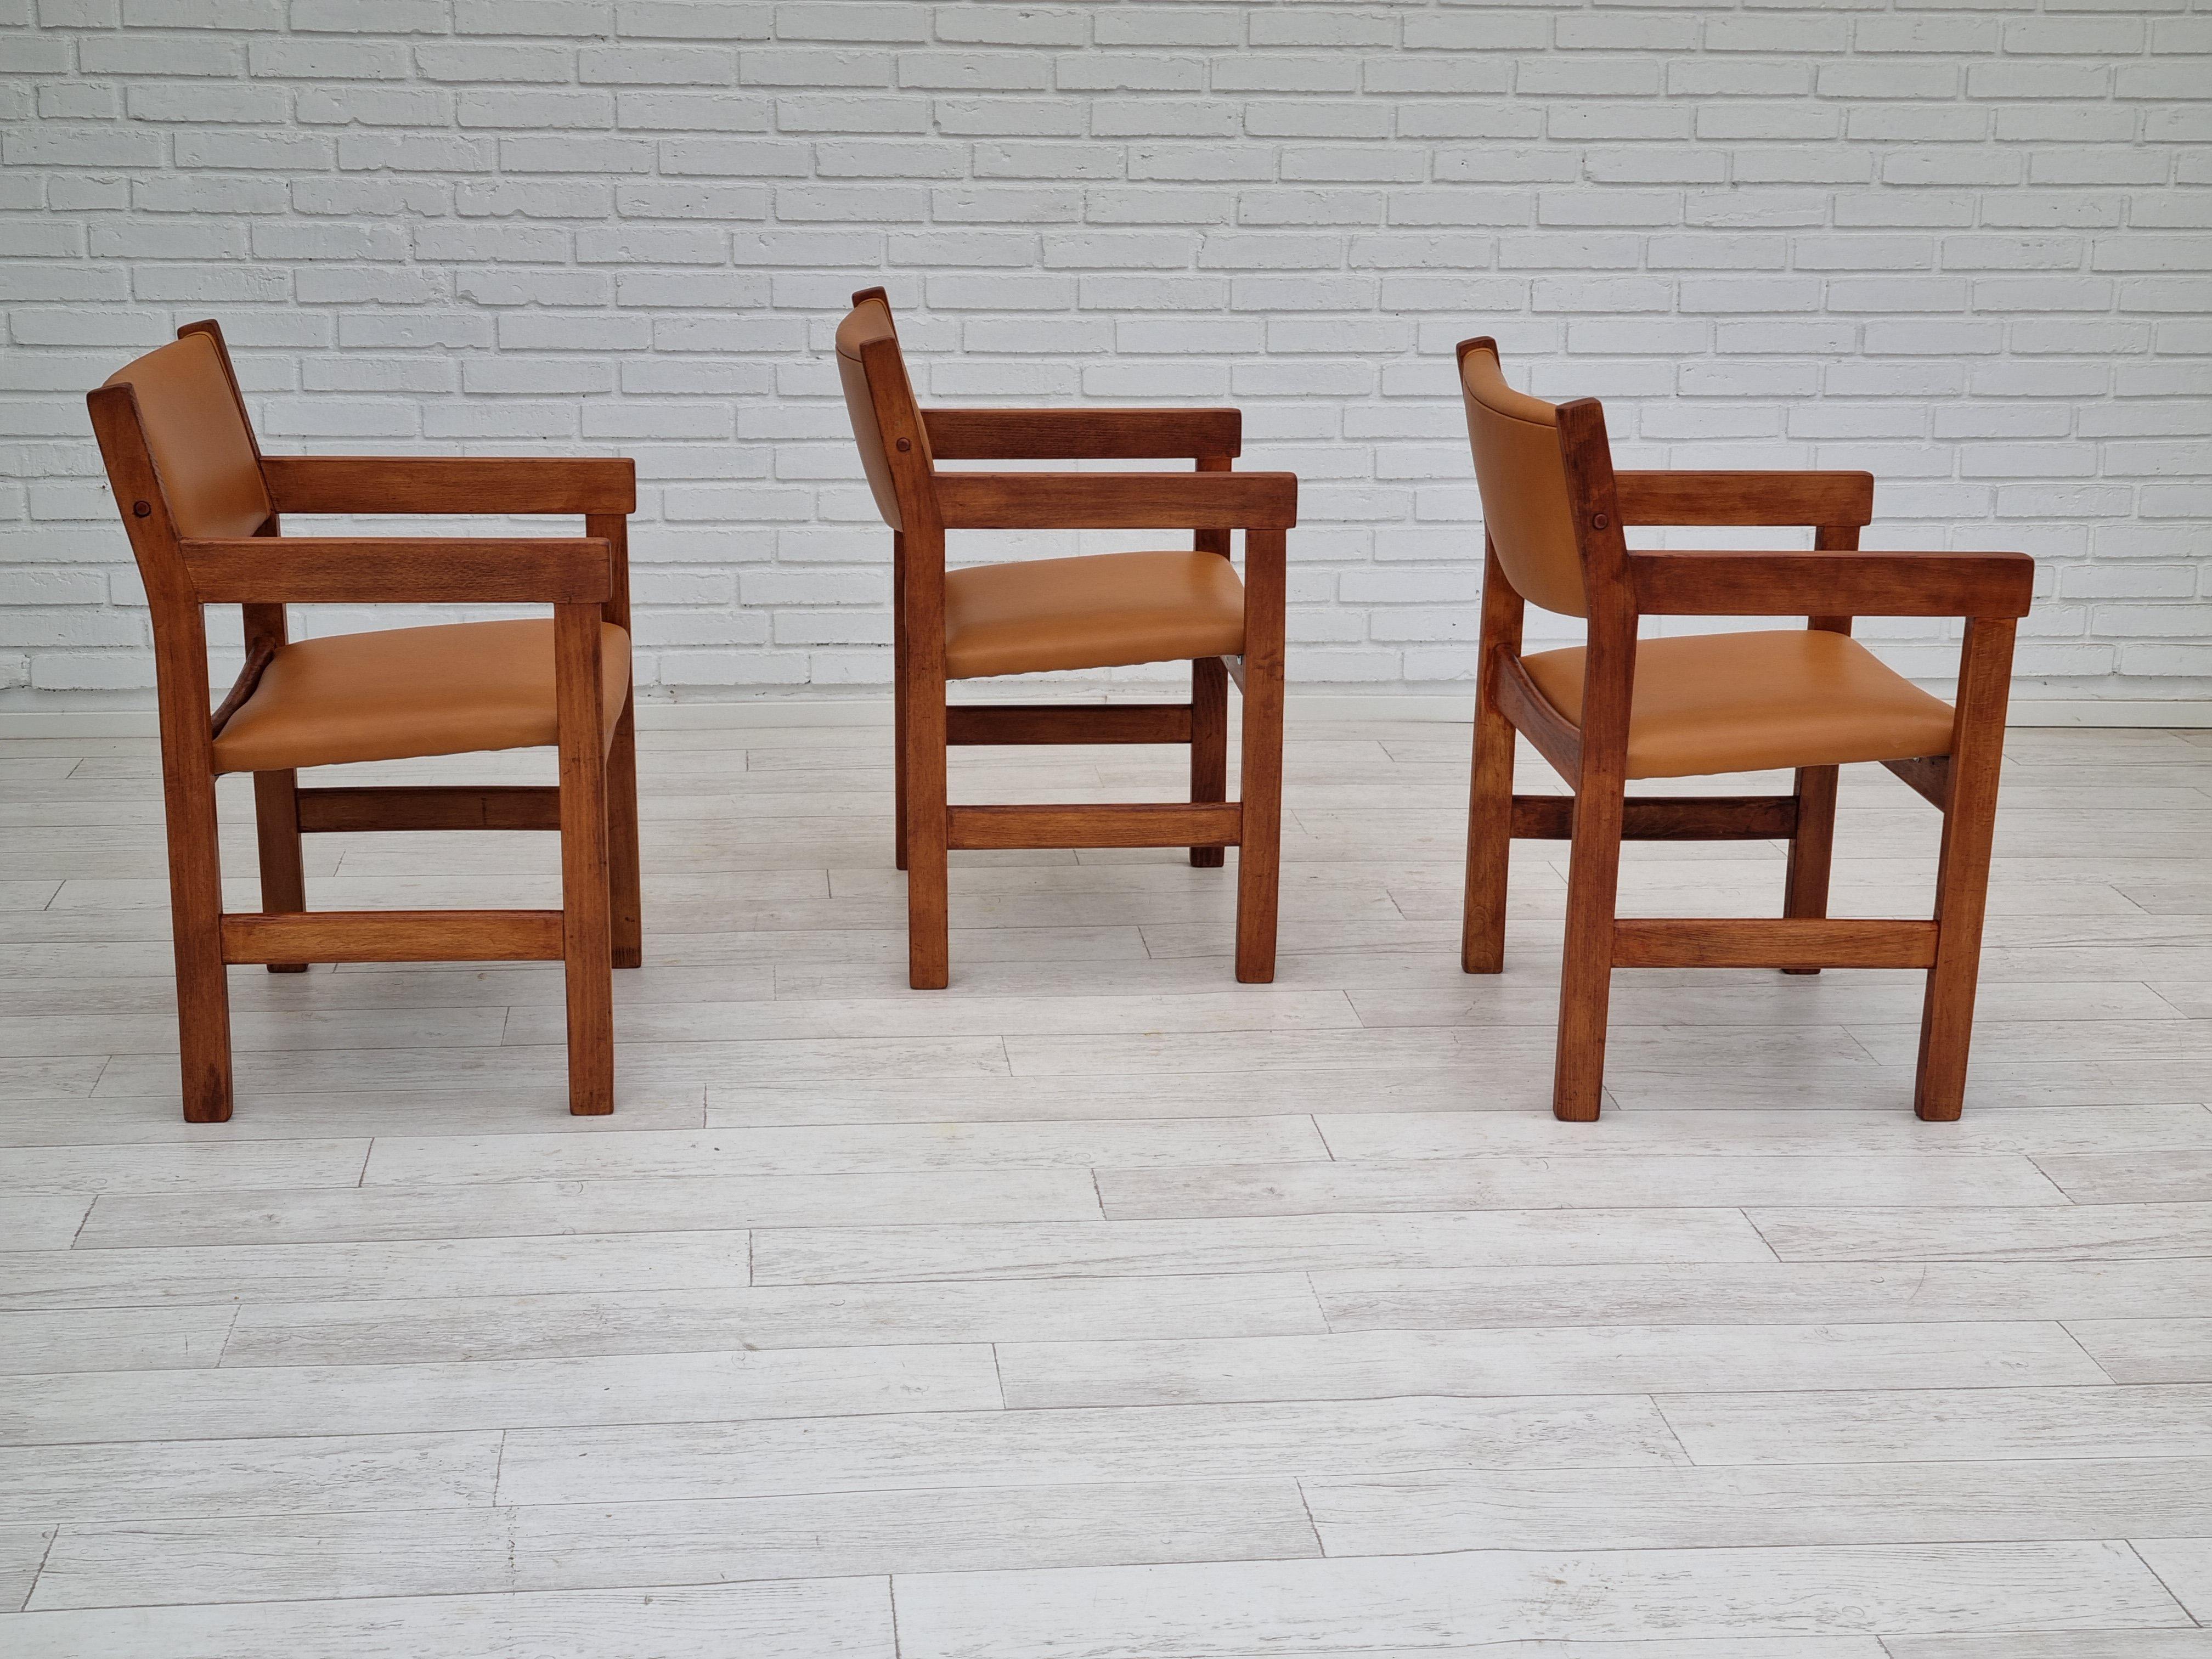 60s, Danish design, H.J.Wegner, set of 3 armchairs, refurbished, leather, wood 1